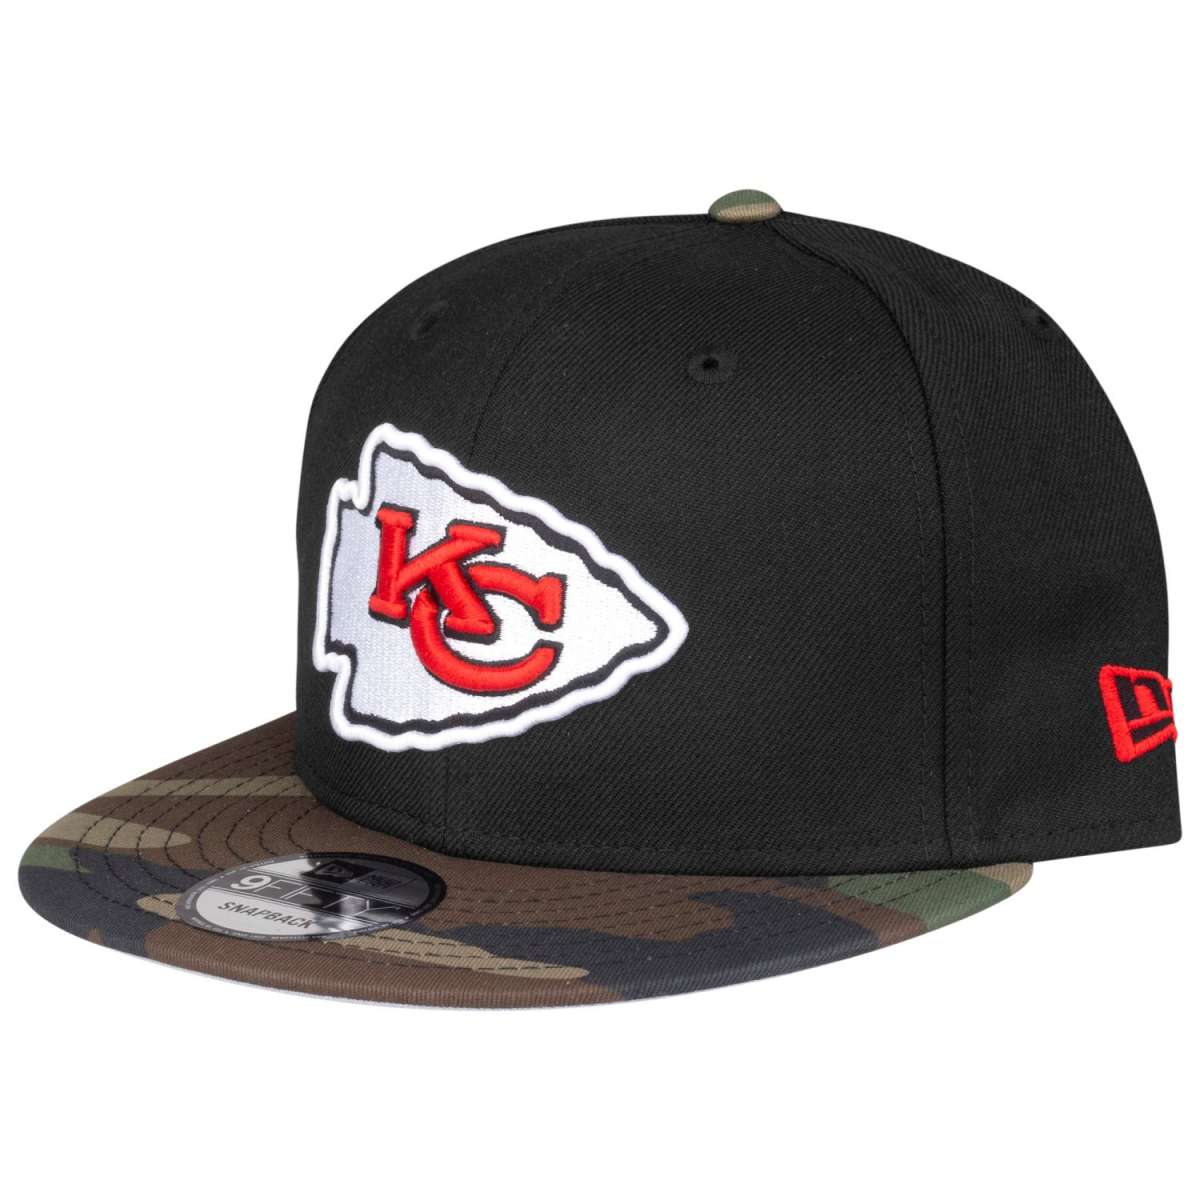 New Era 9Fifty Snapback Cap Kansas City Chiefs schwarz camo Snapback